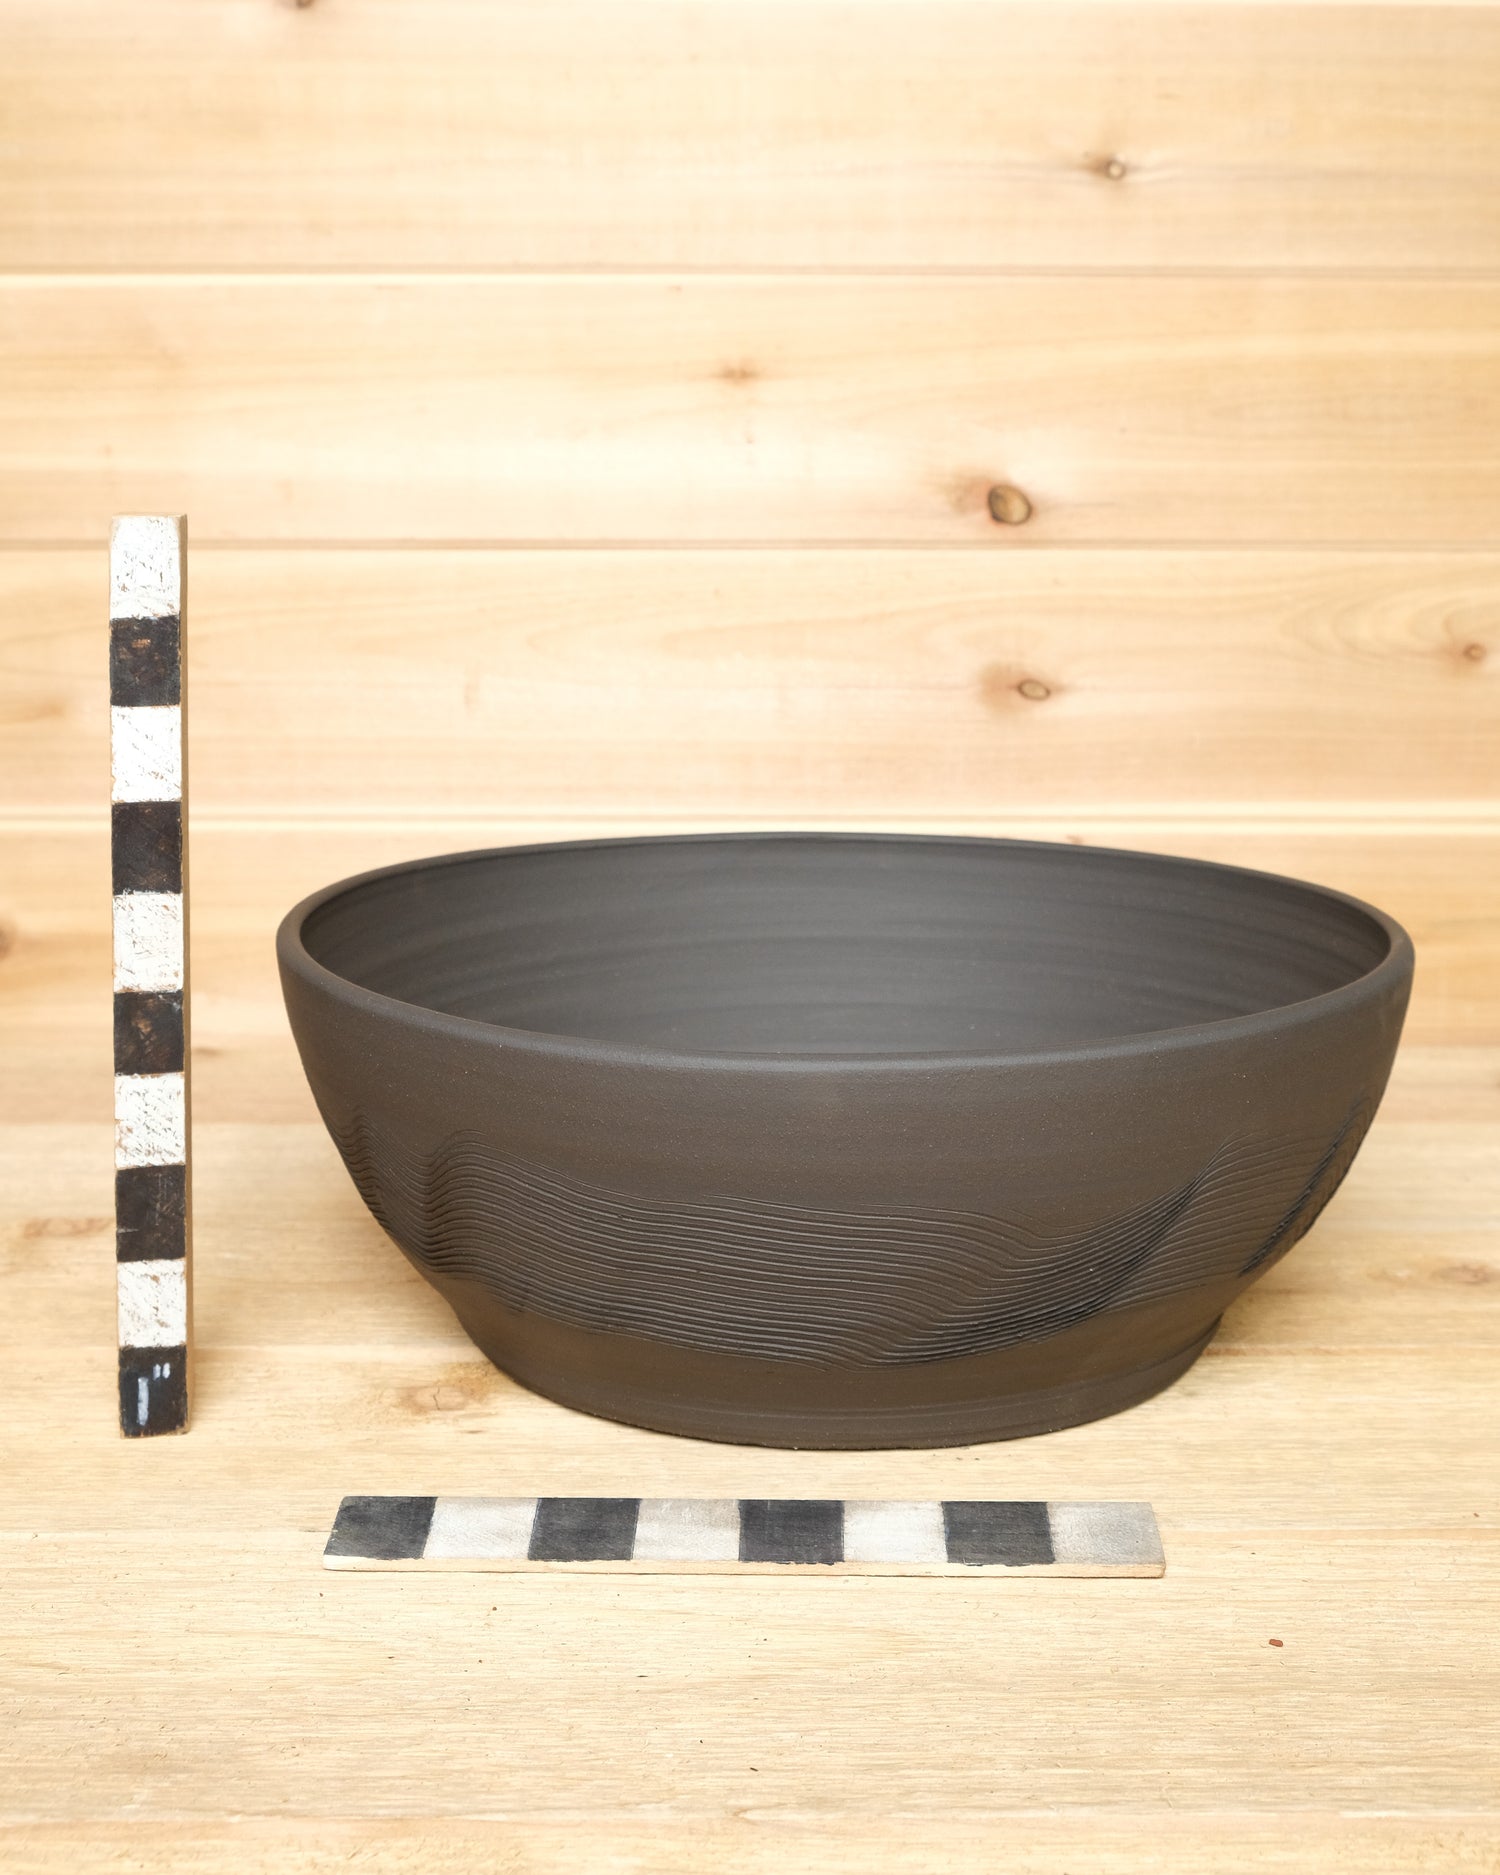 Large Textured Bowl